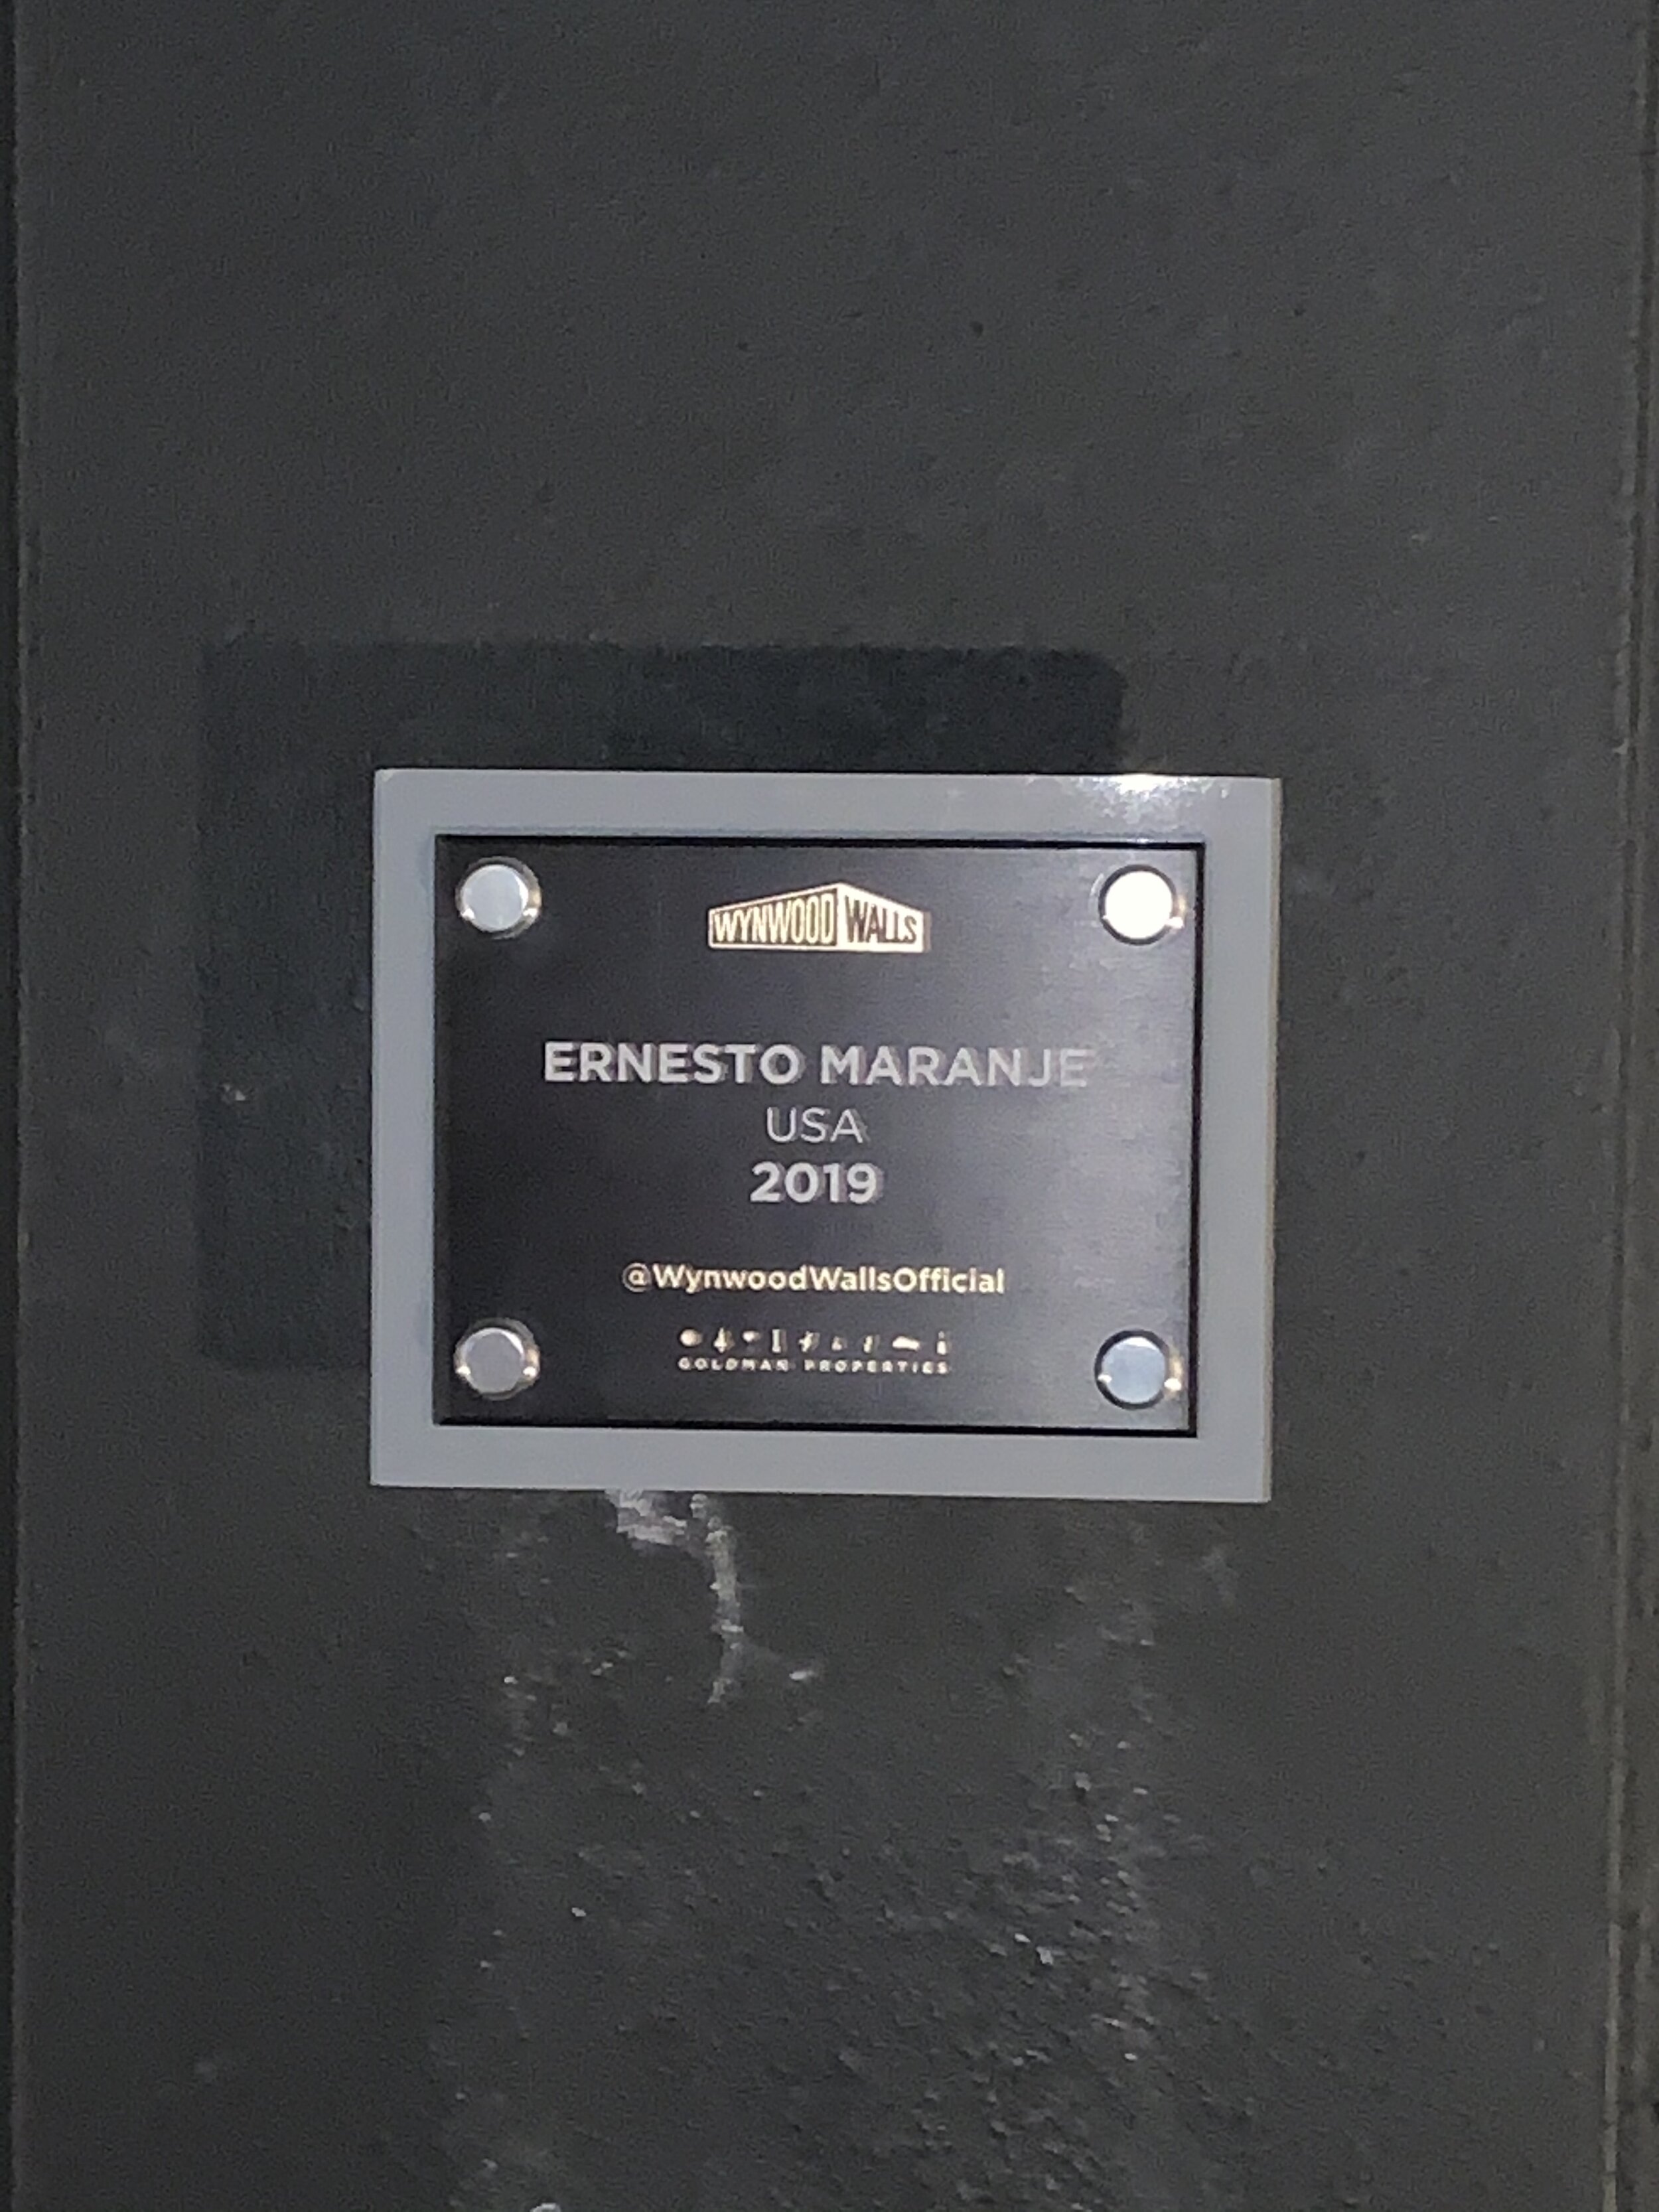 Ernesto Maranje - Wynwood Walls Plaque.JPG